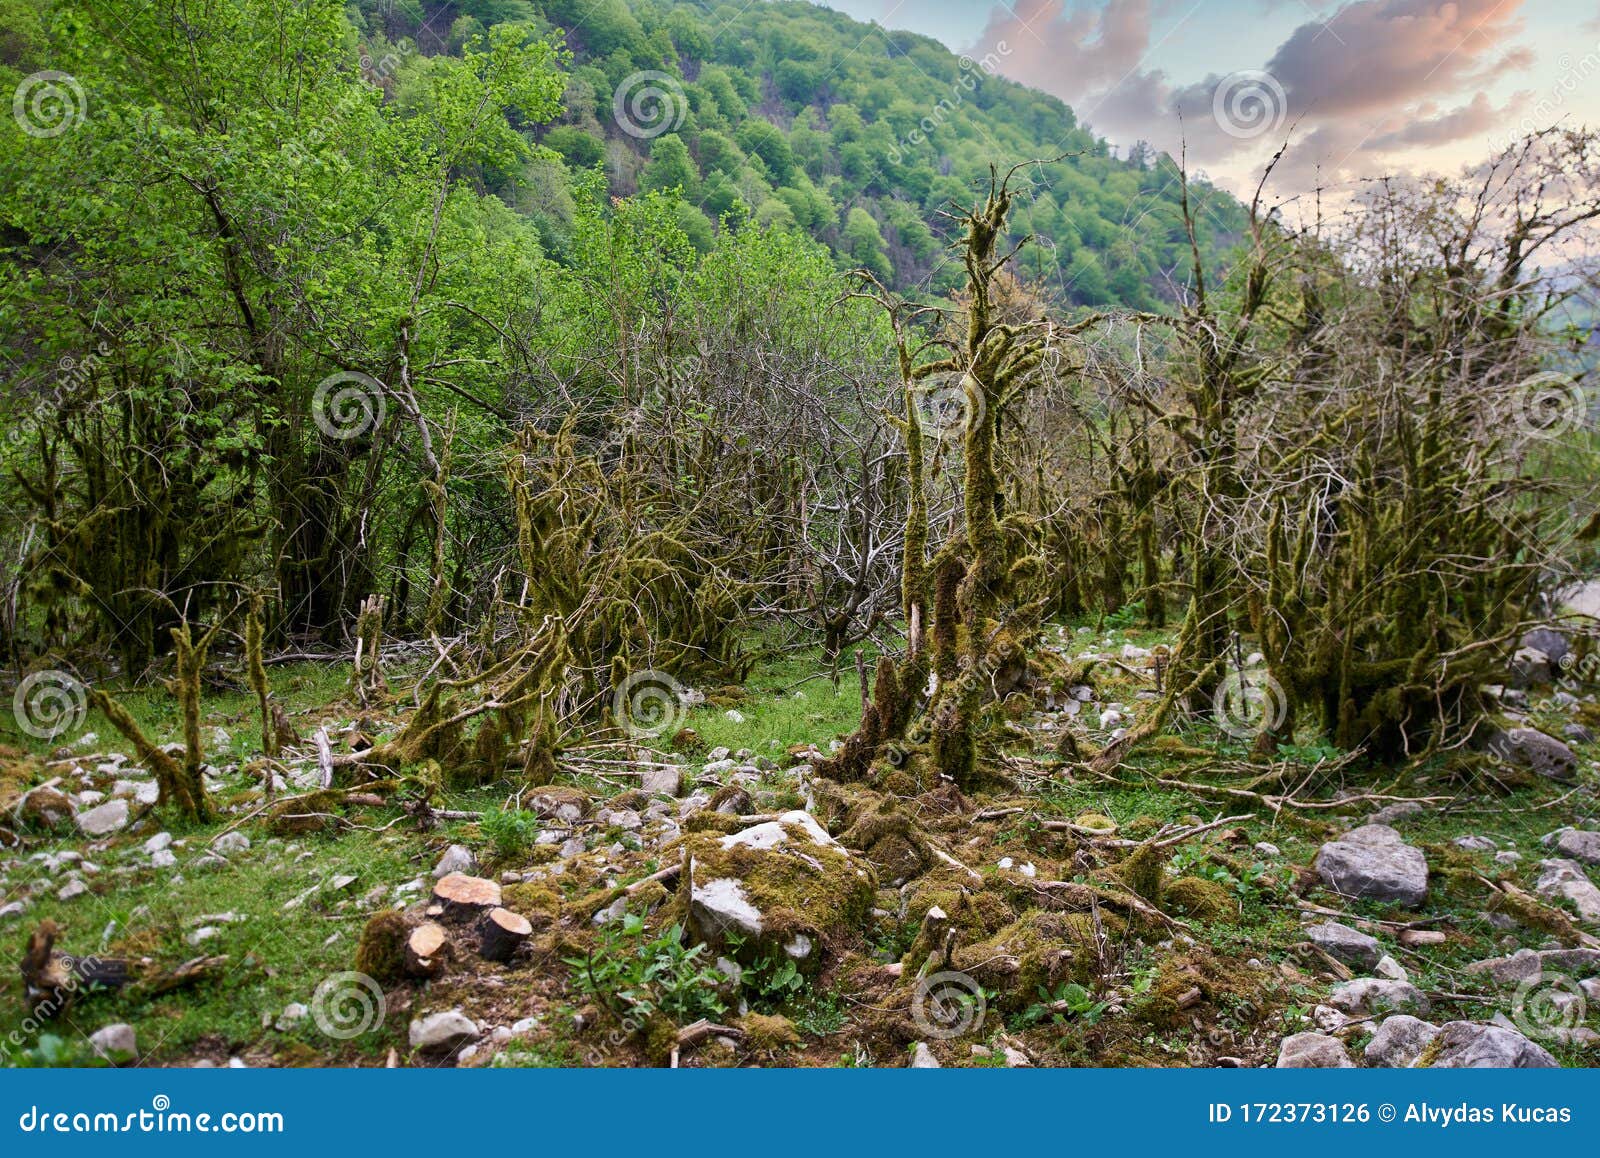 flora of the caucasus mountain gorge